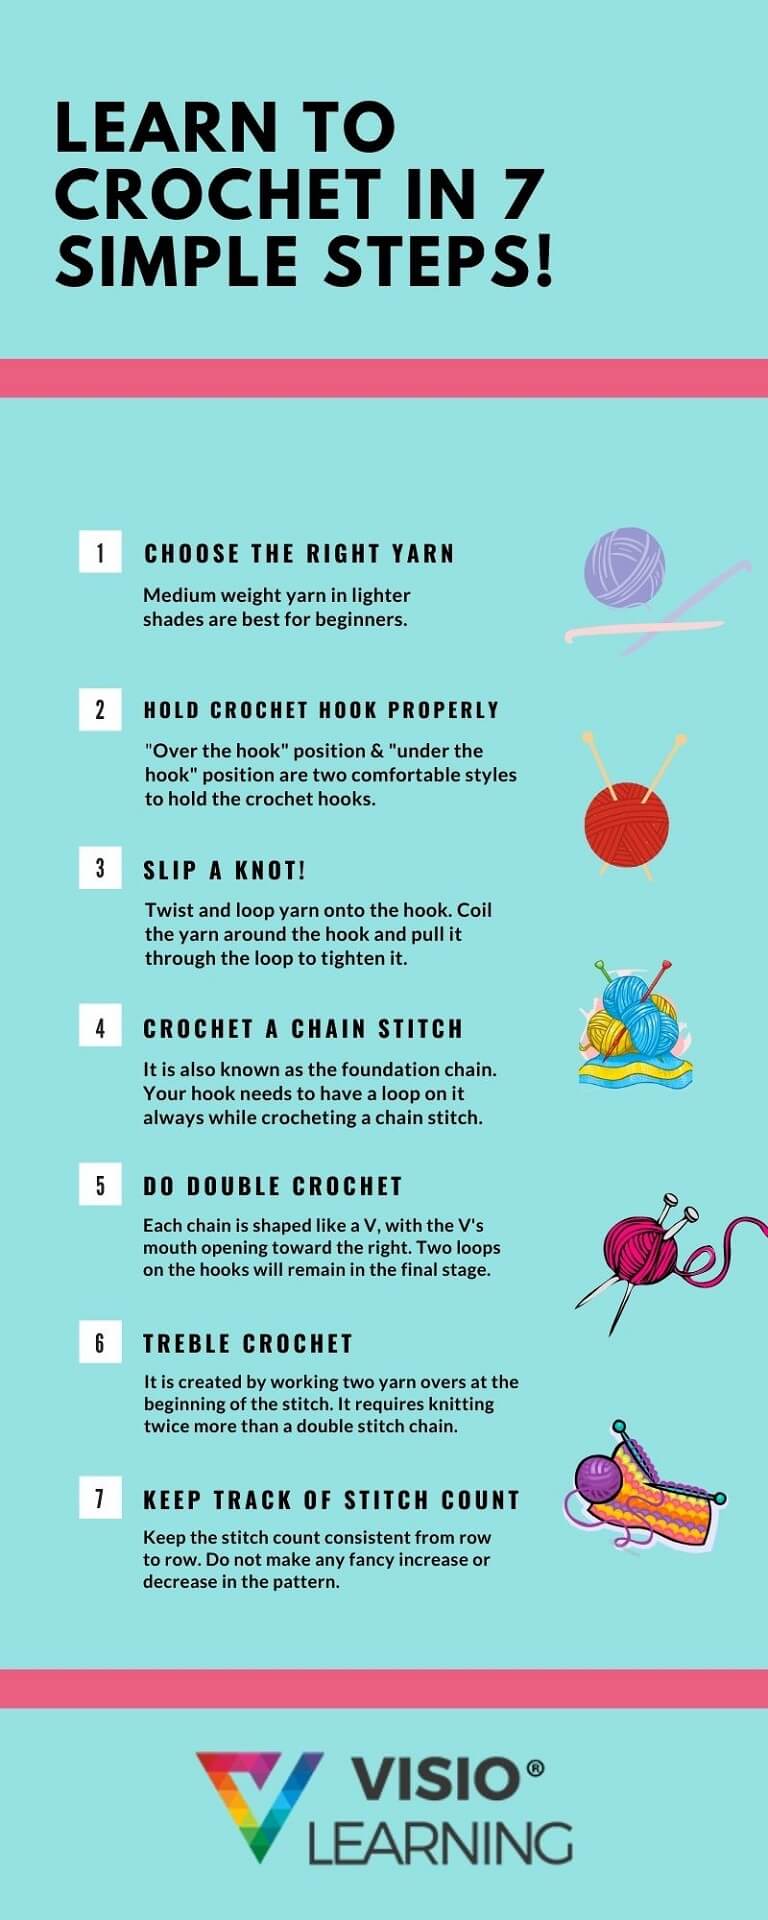 Learn to crochet in 7 simple steps